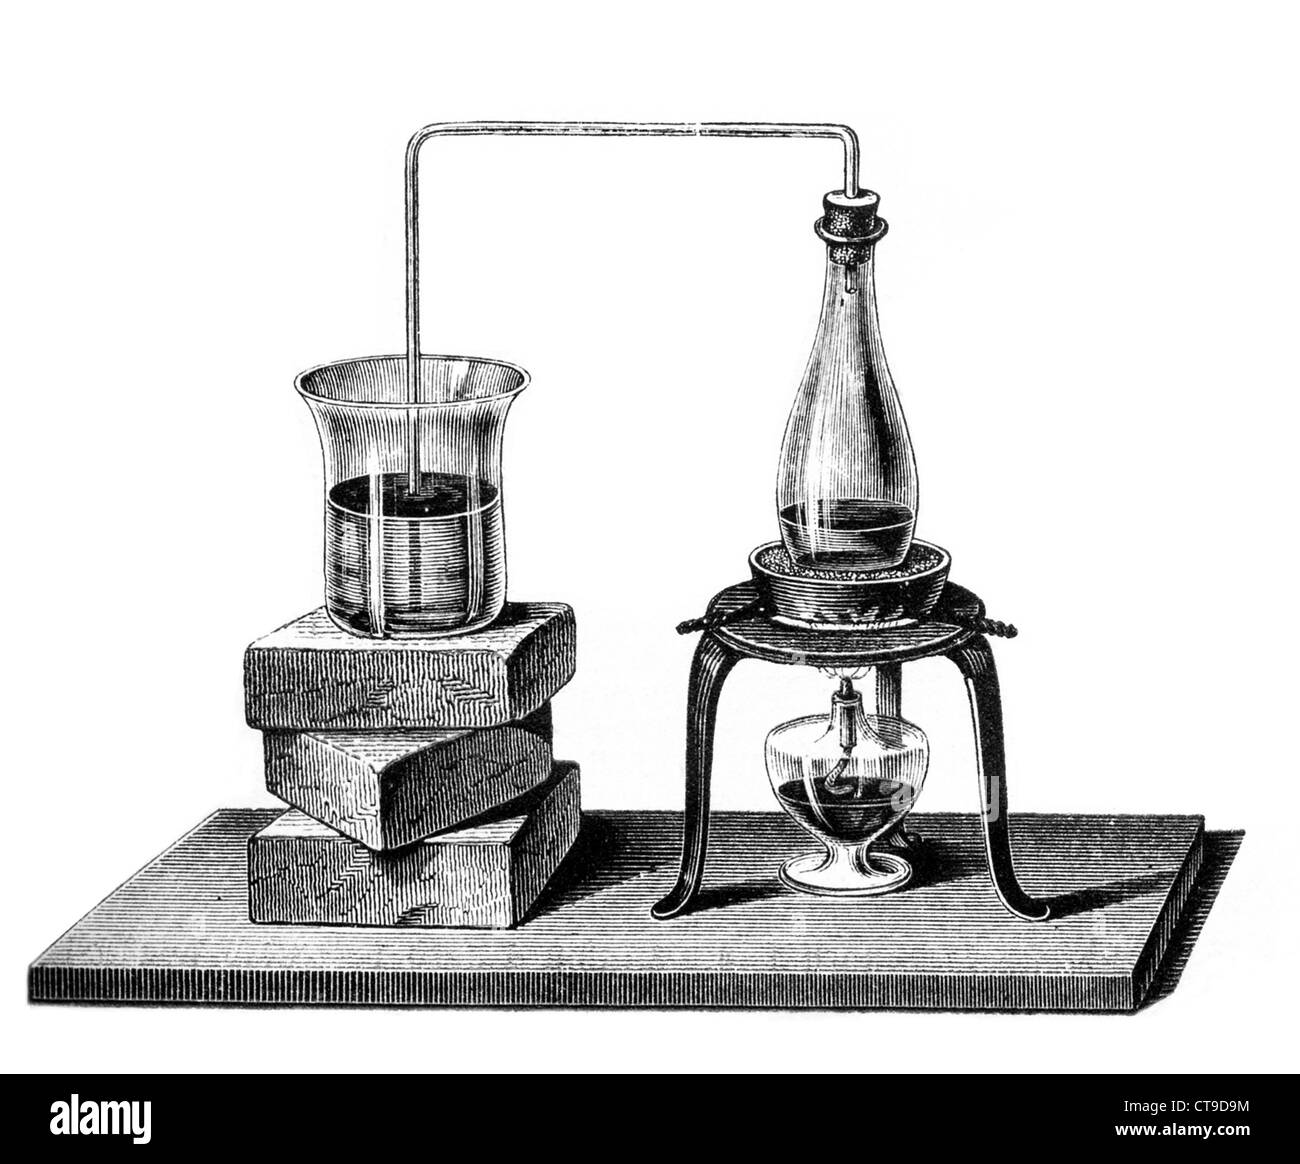 Chemistry: heating by vapor Stock Photo